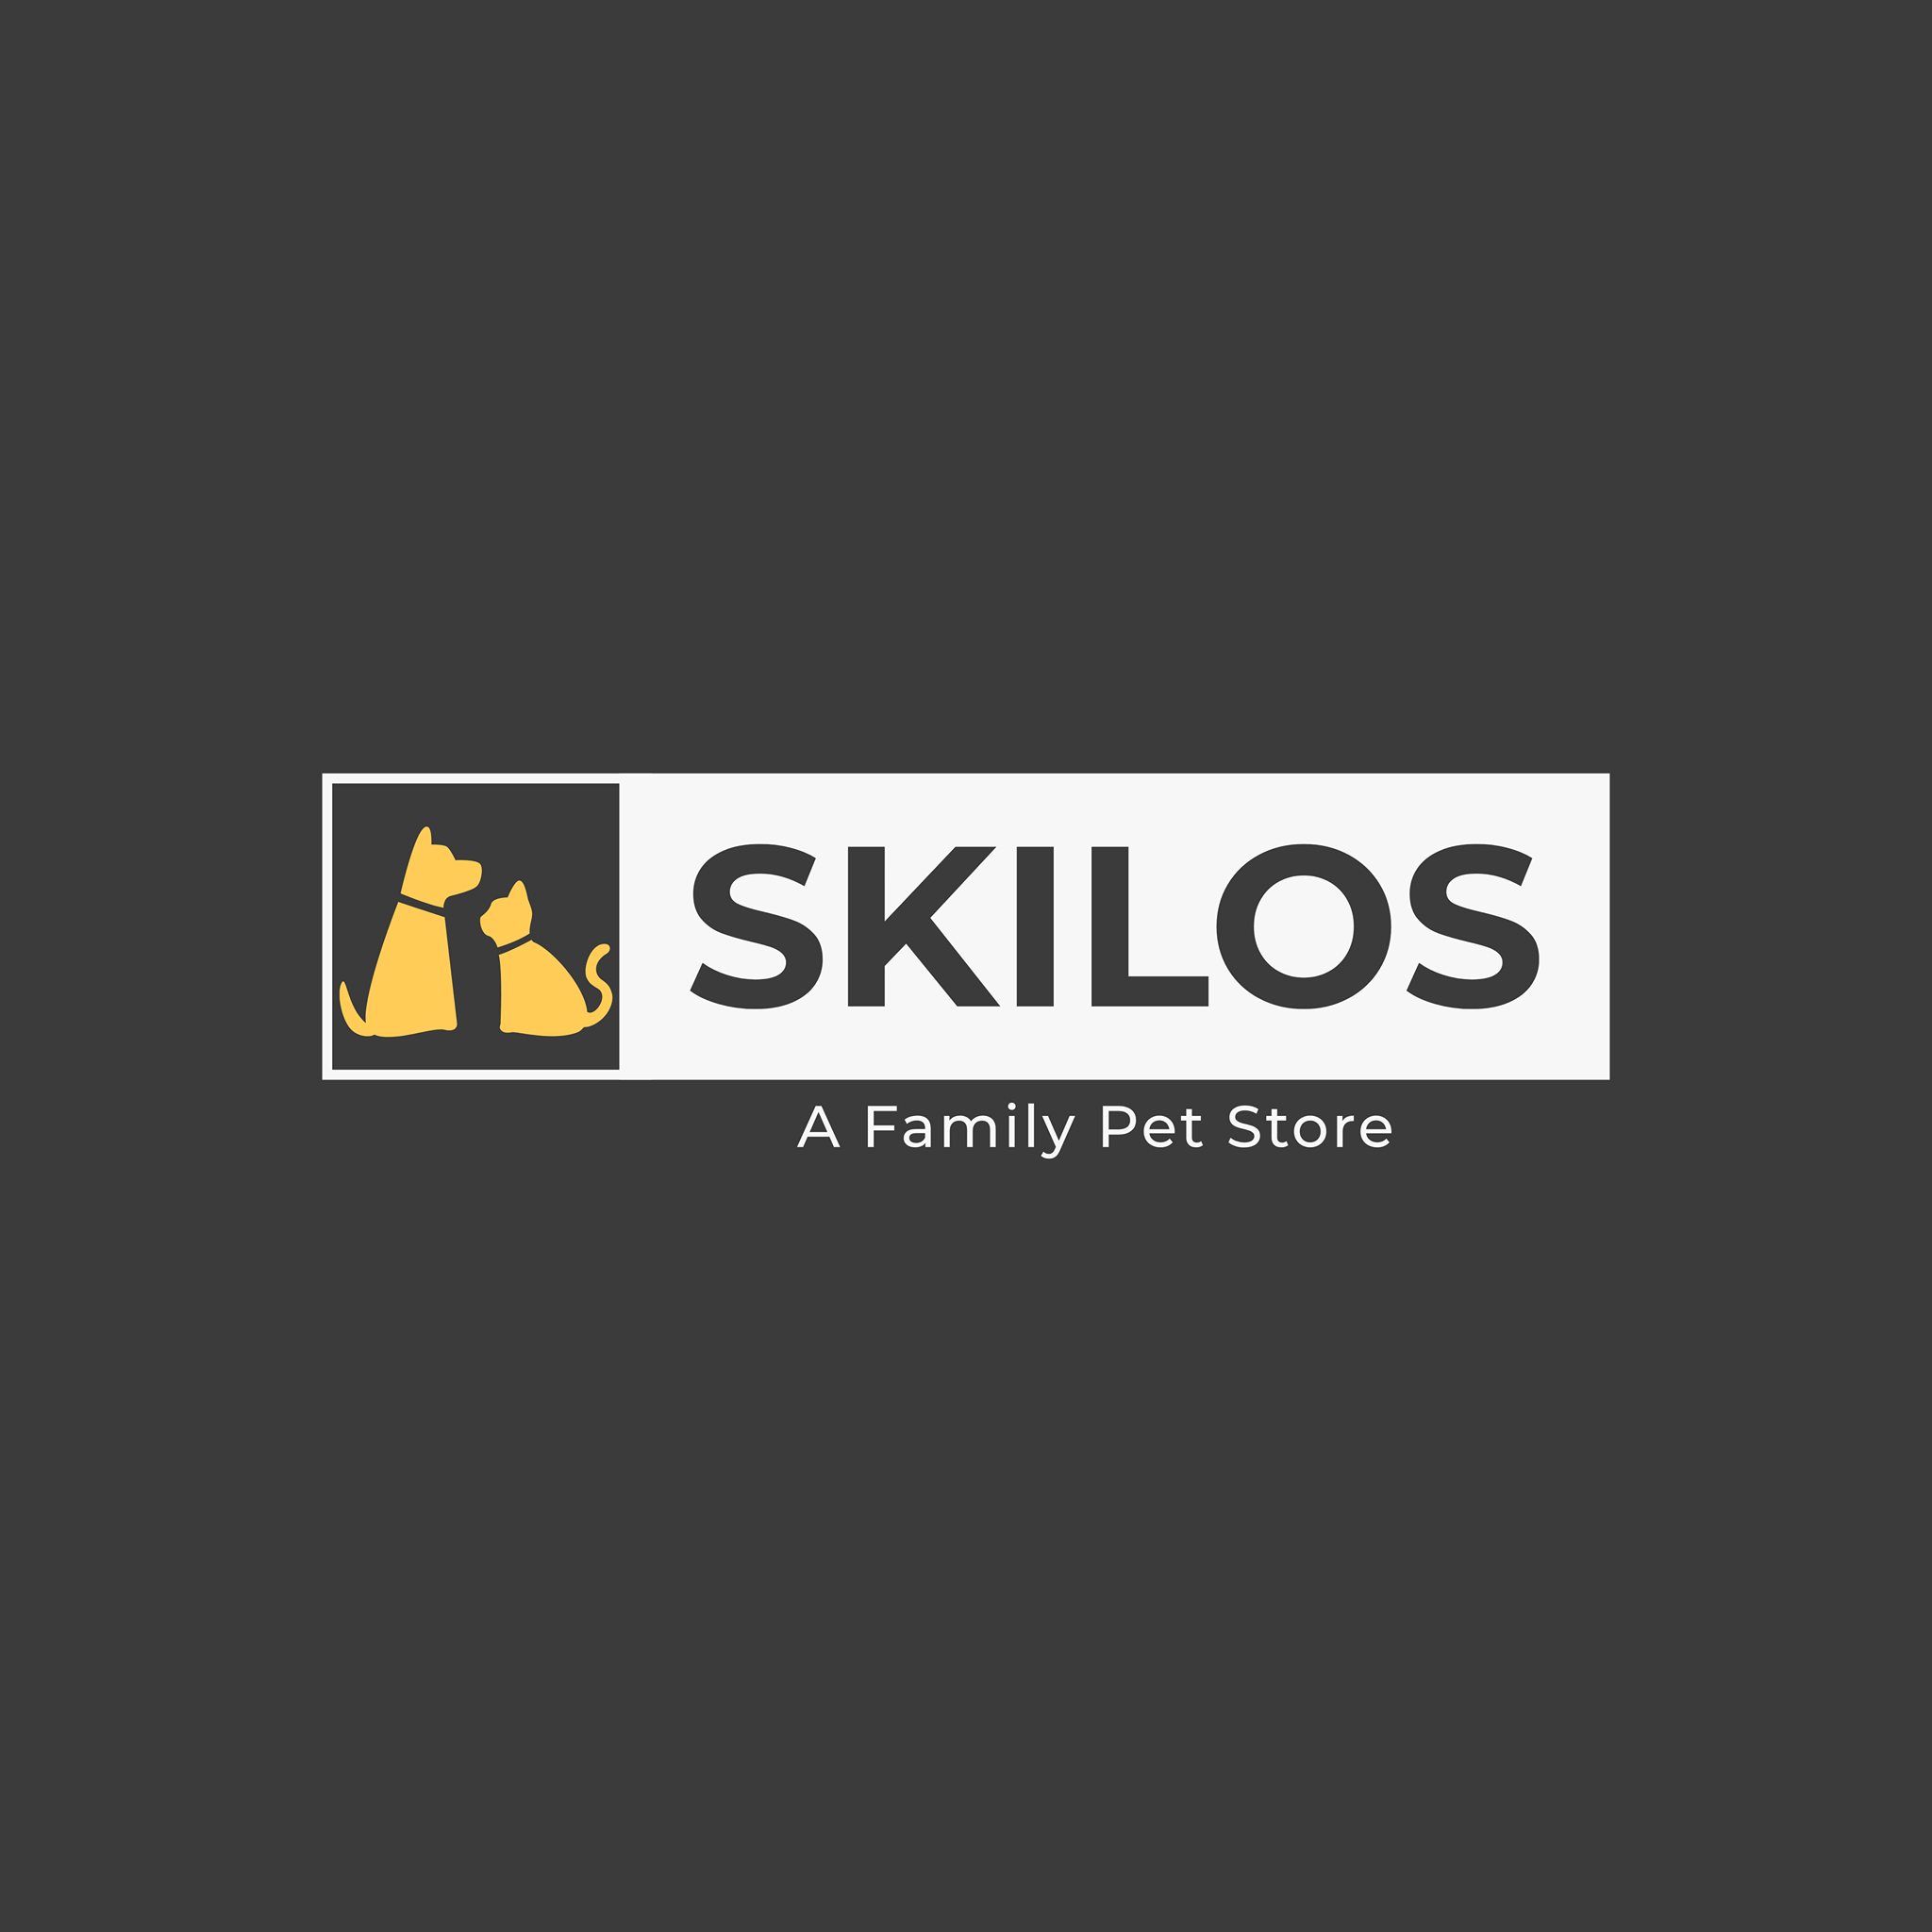 Company logo of Skilos, A Family Pet Store